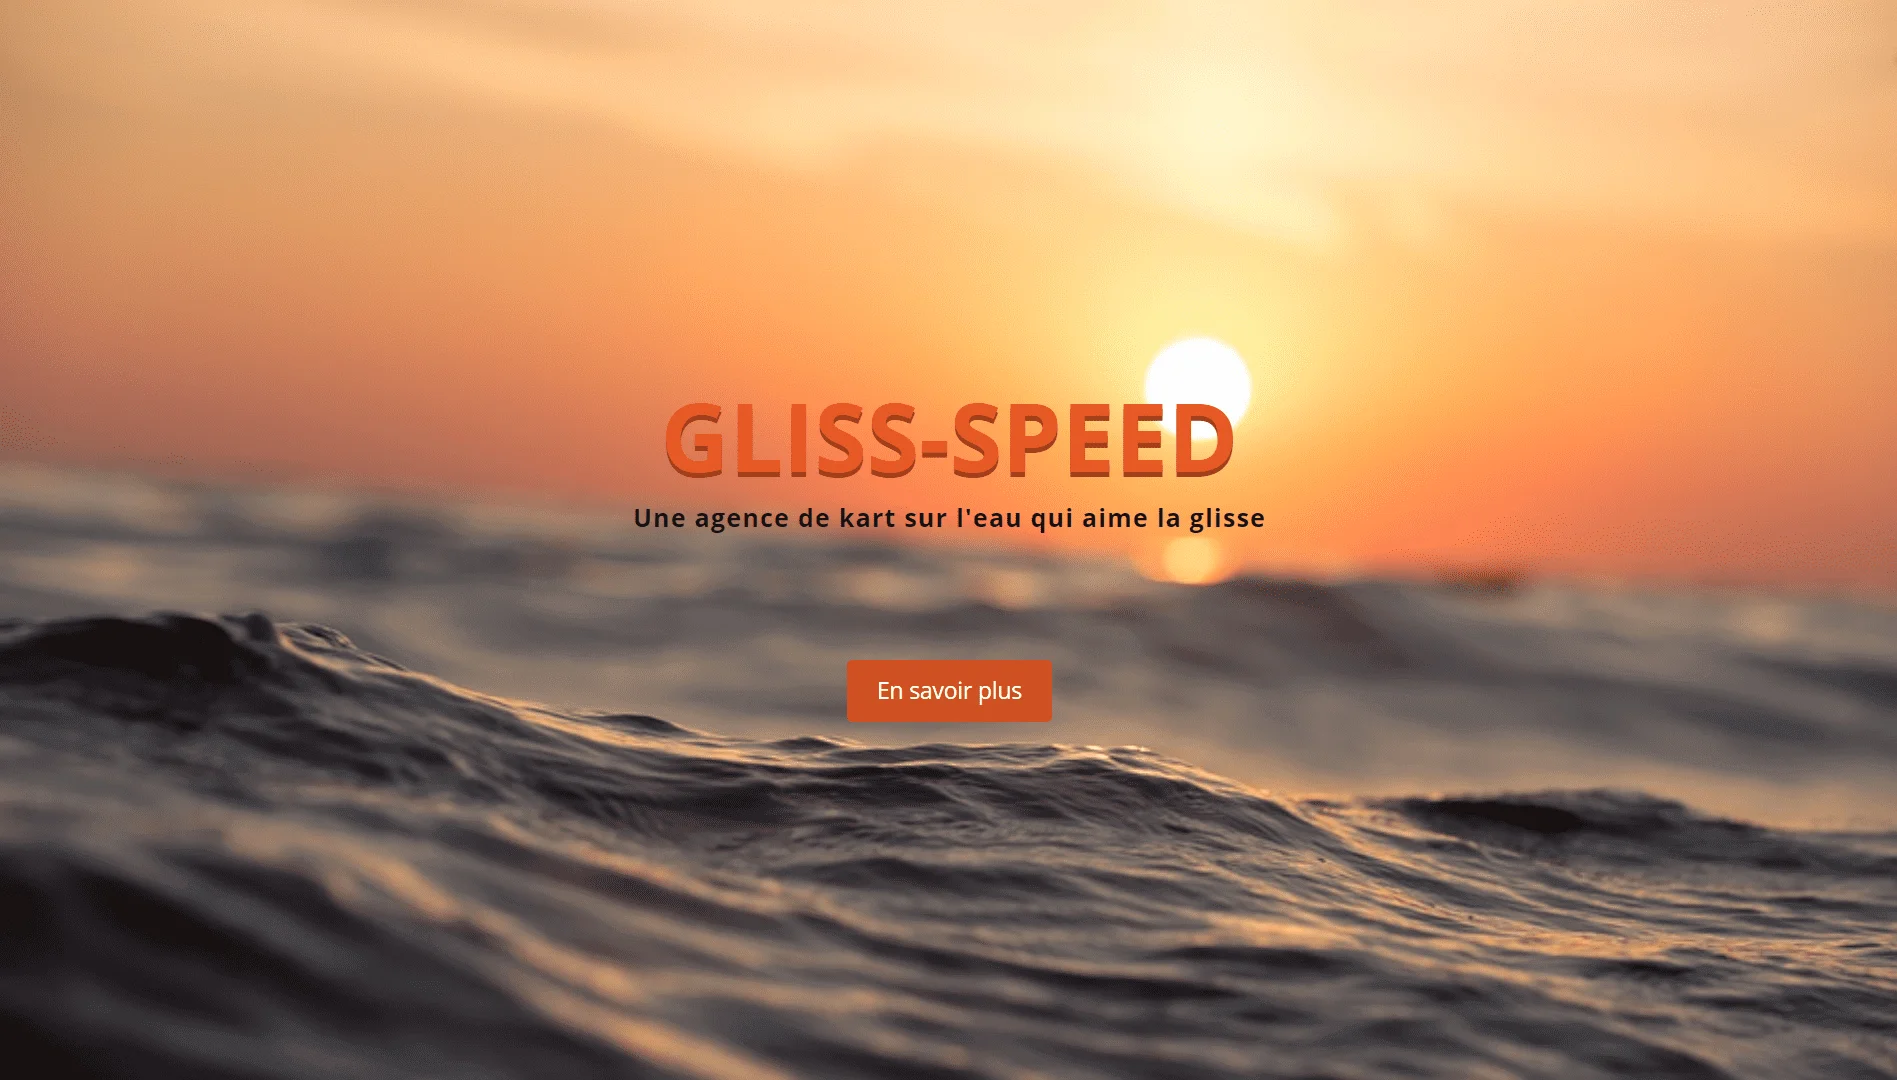 2eme image du site gliss-speed